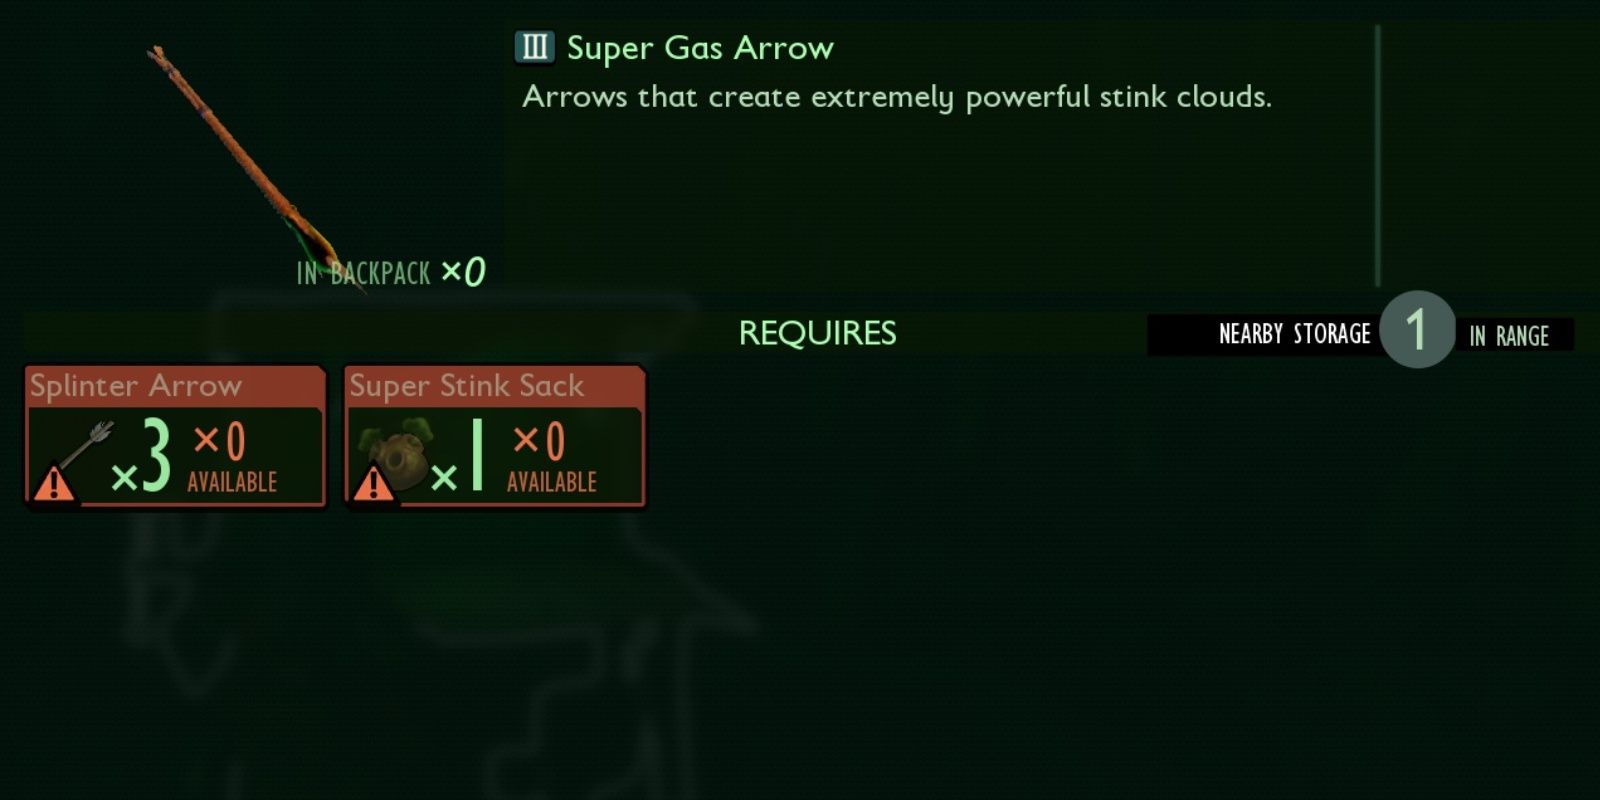 Super Gas Arrow's effect and recipe.